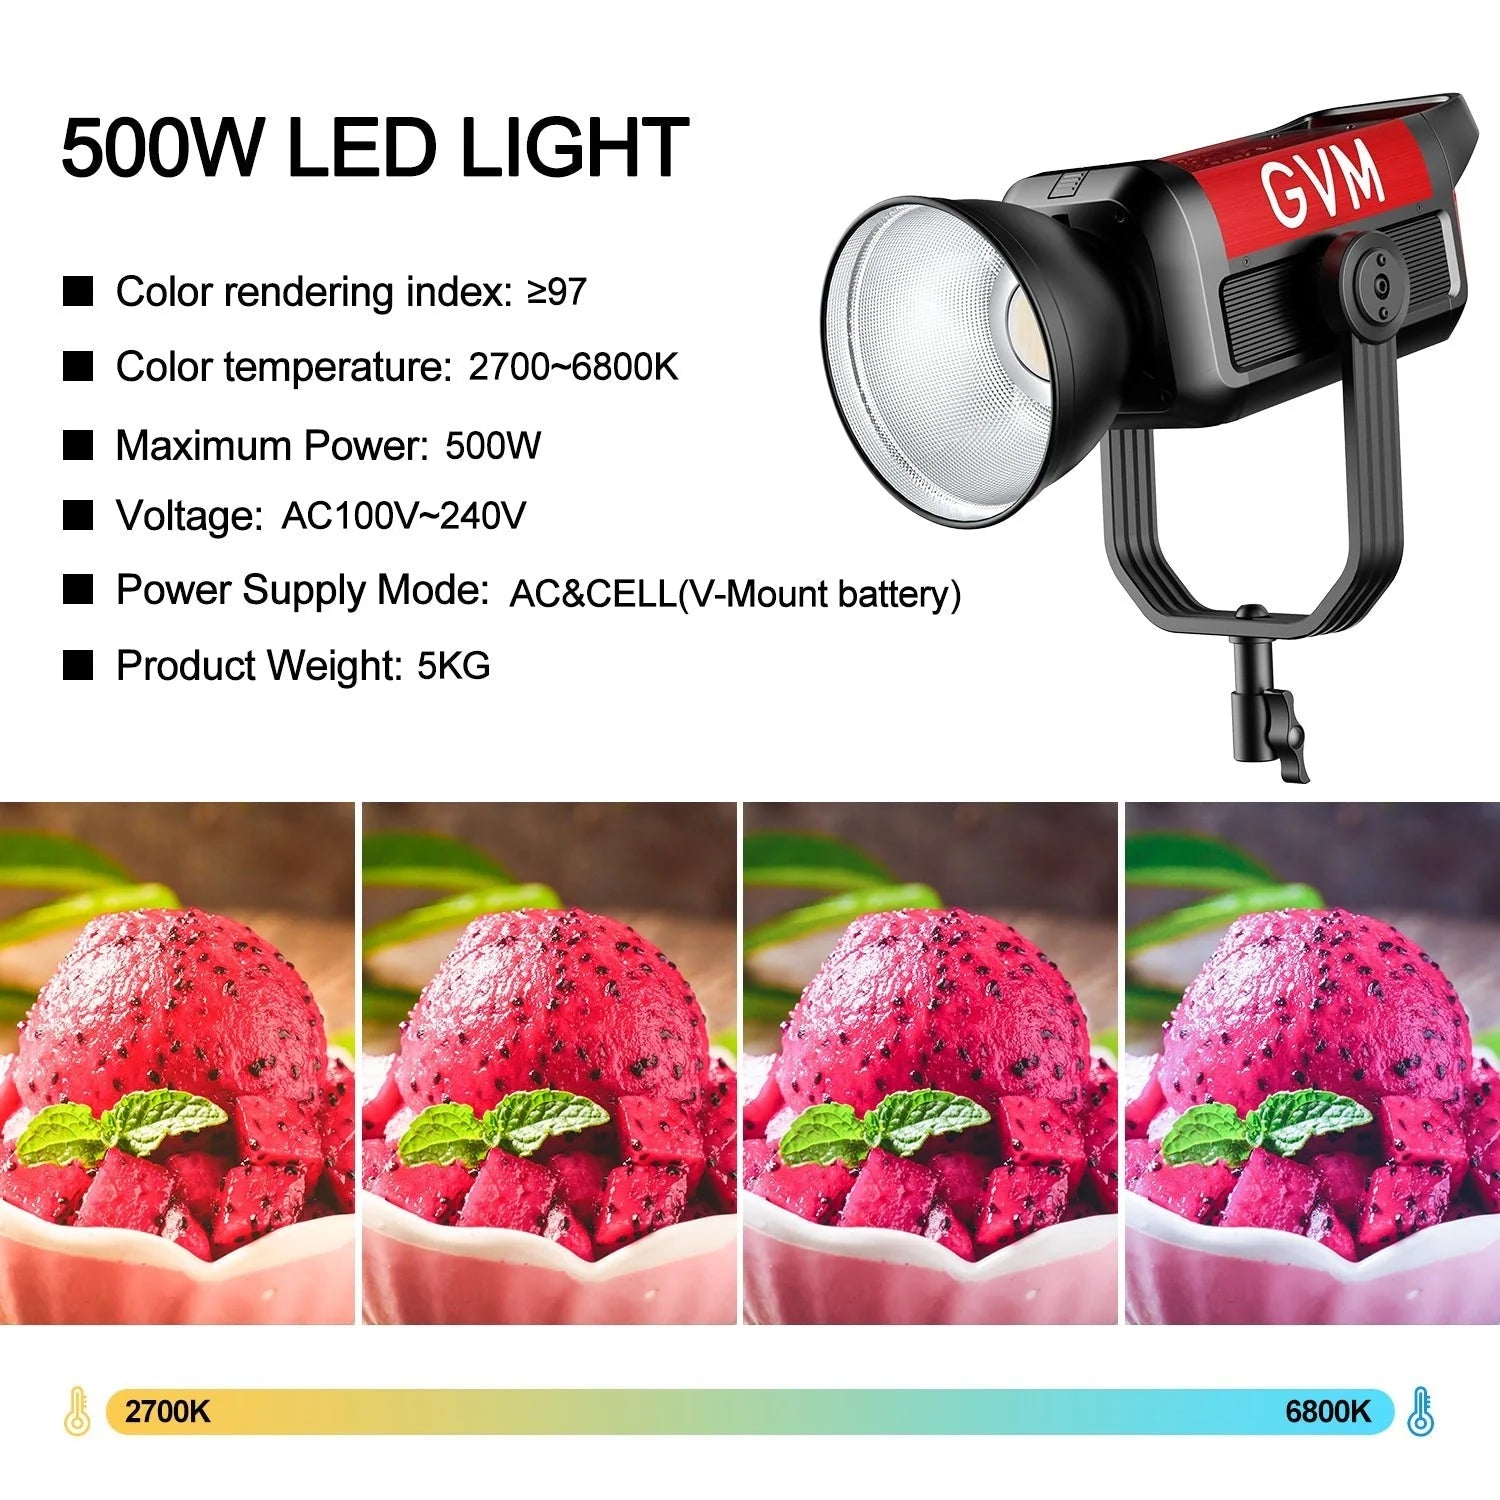 GVM-PRO-SD500B COB - Bi-Color LED Monolight - mylensball.com.au